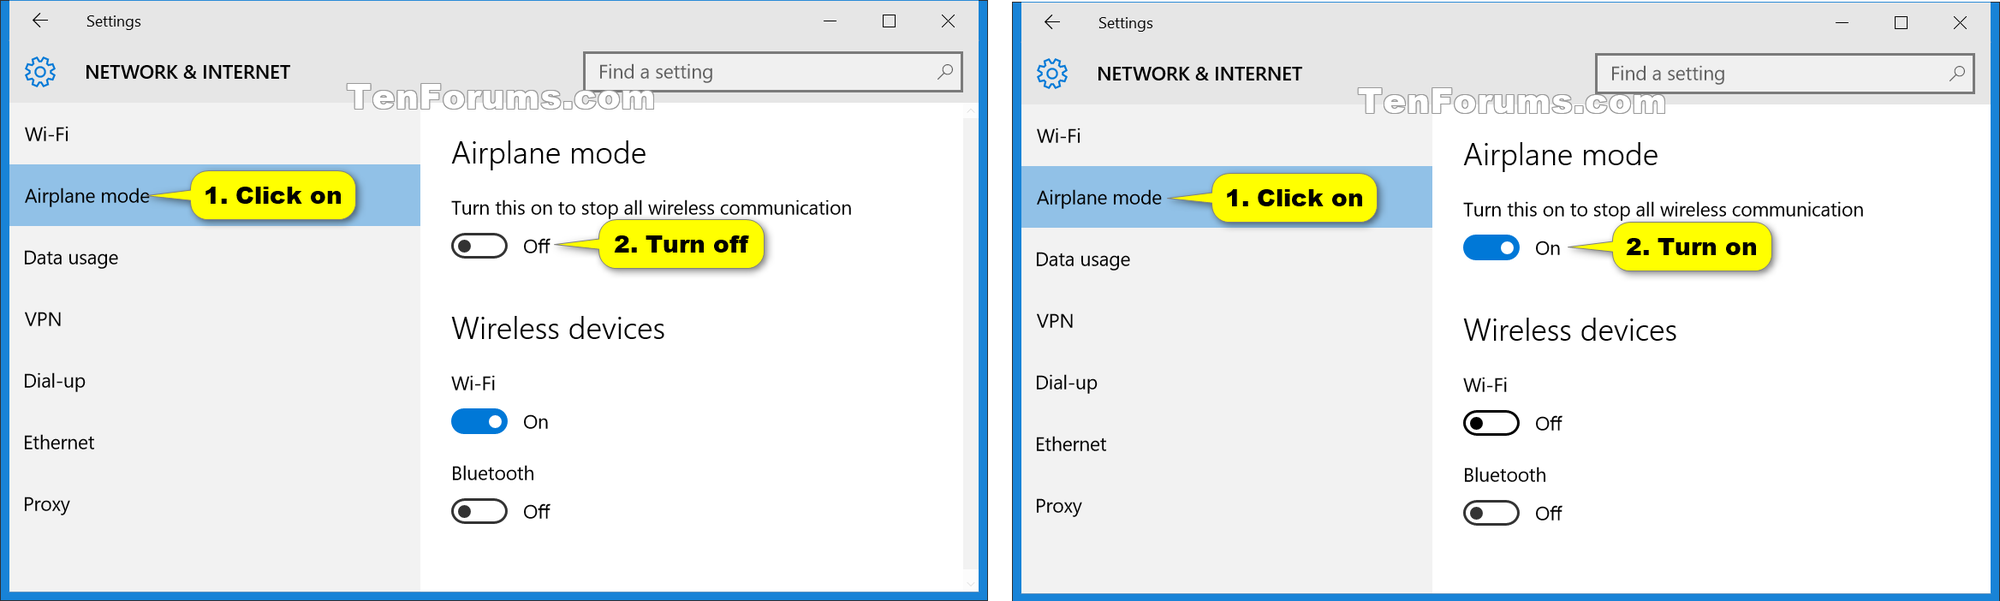 Taskbar Internet Icon in Airplane Mode 7zY1c.png